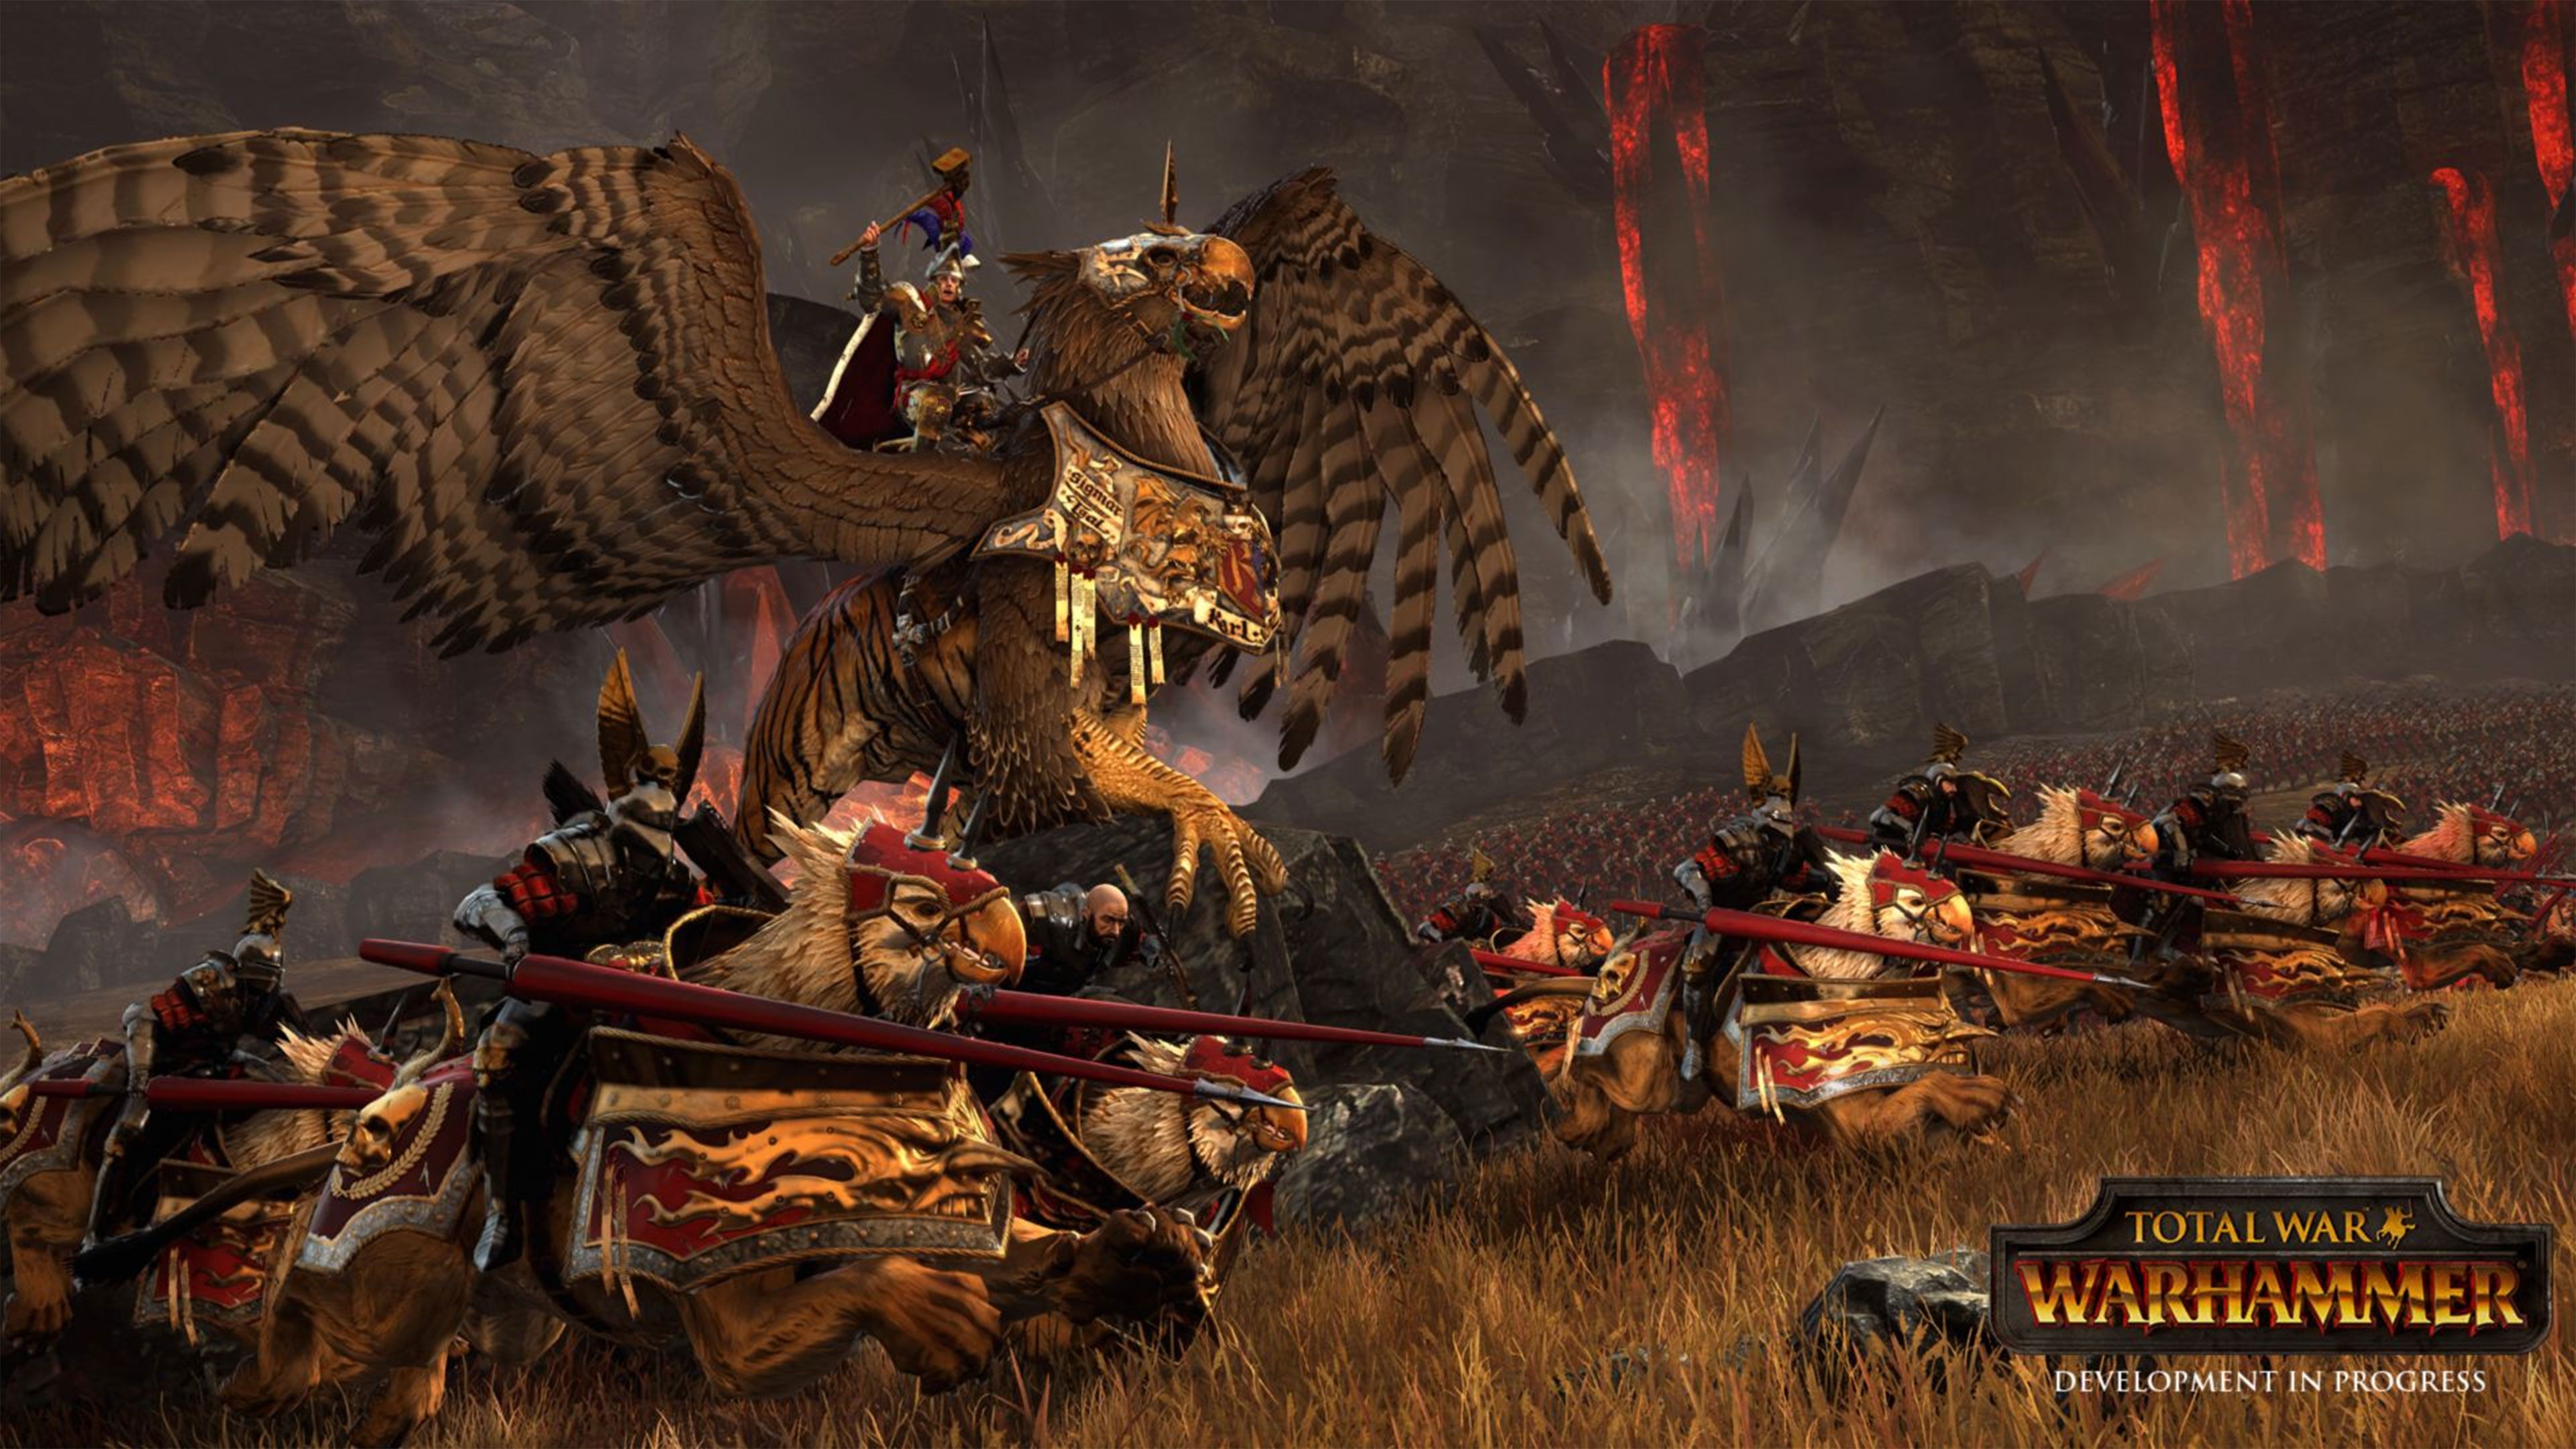 Total War Warhammer Wallpaper in Ultra HDK